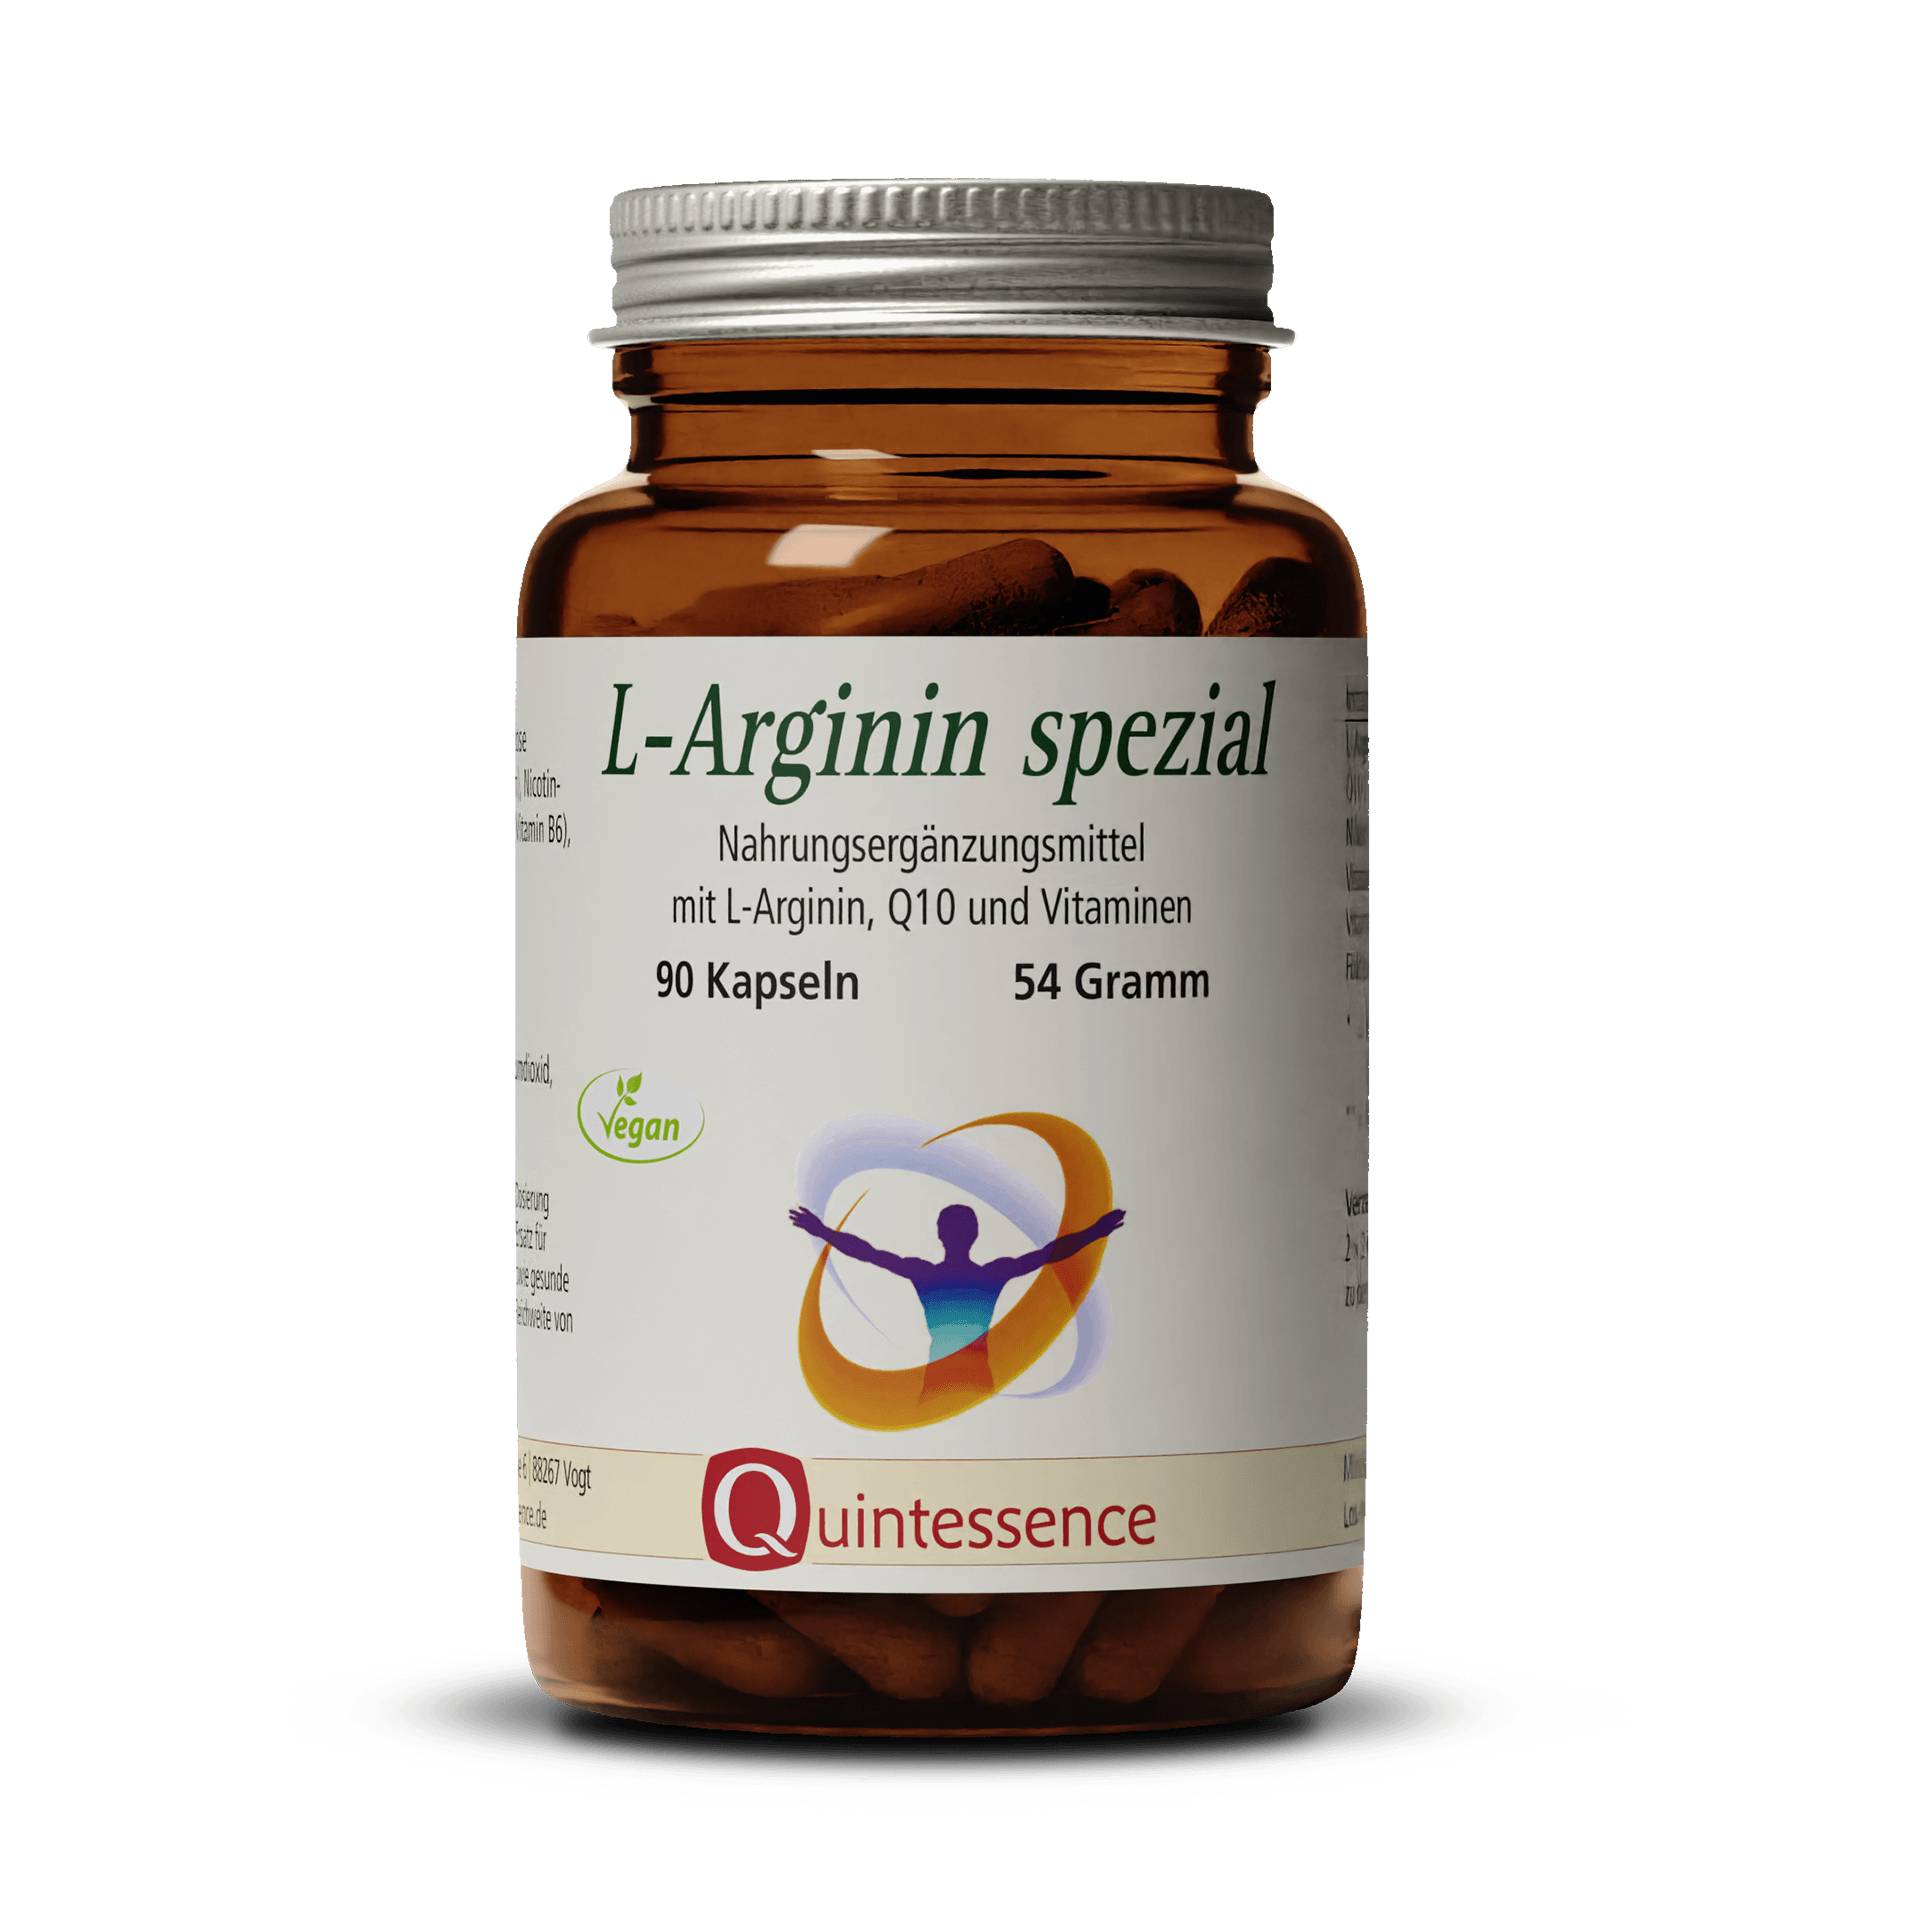 L-Arginin spezial, 90 Kapseln von Quintessence